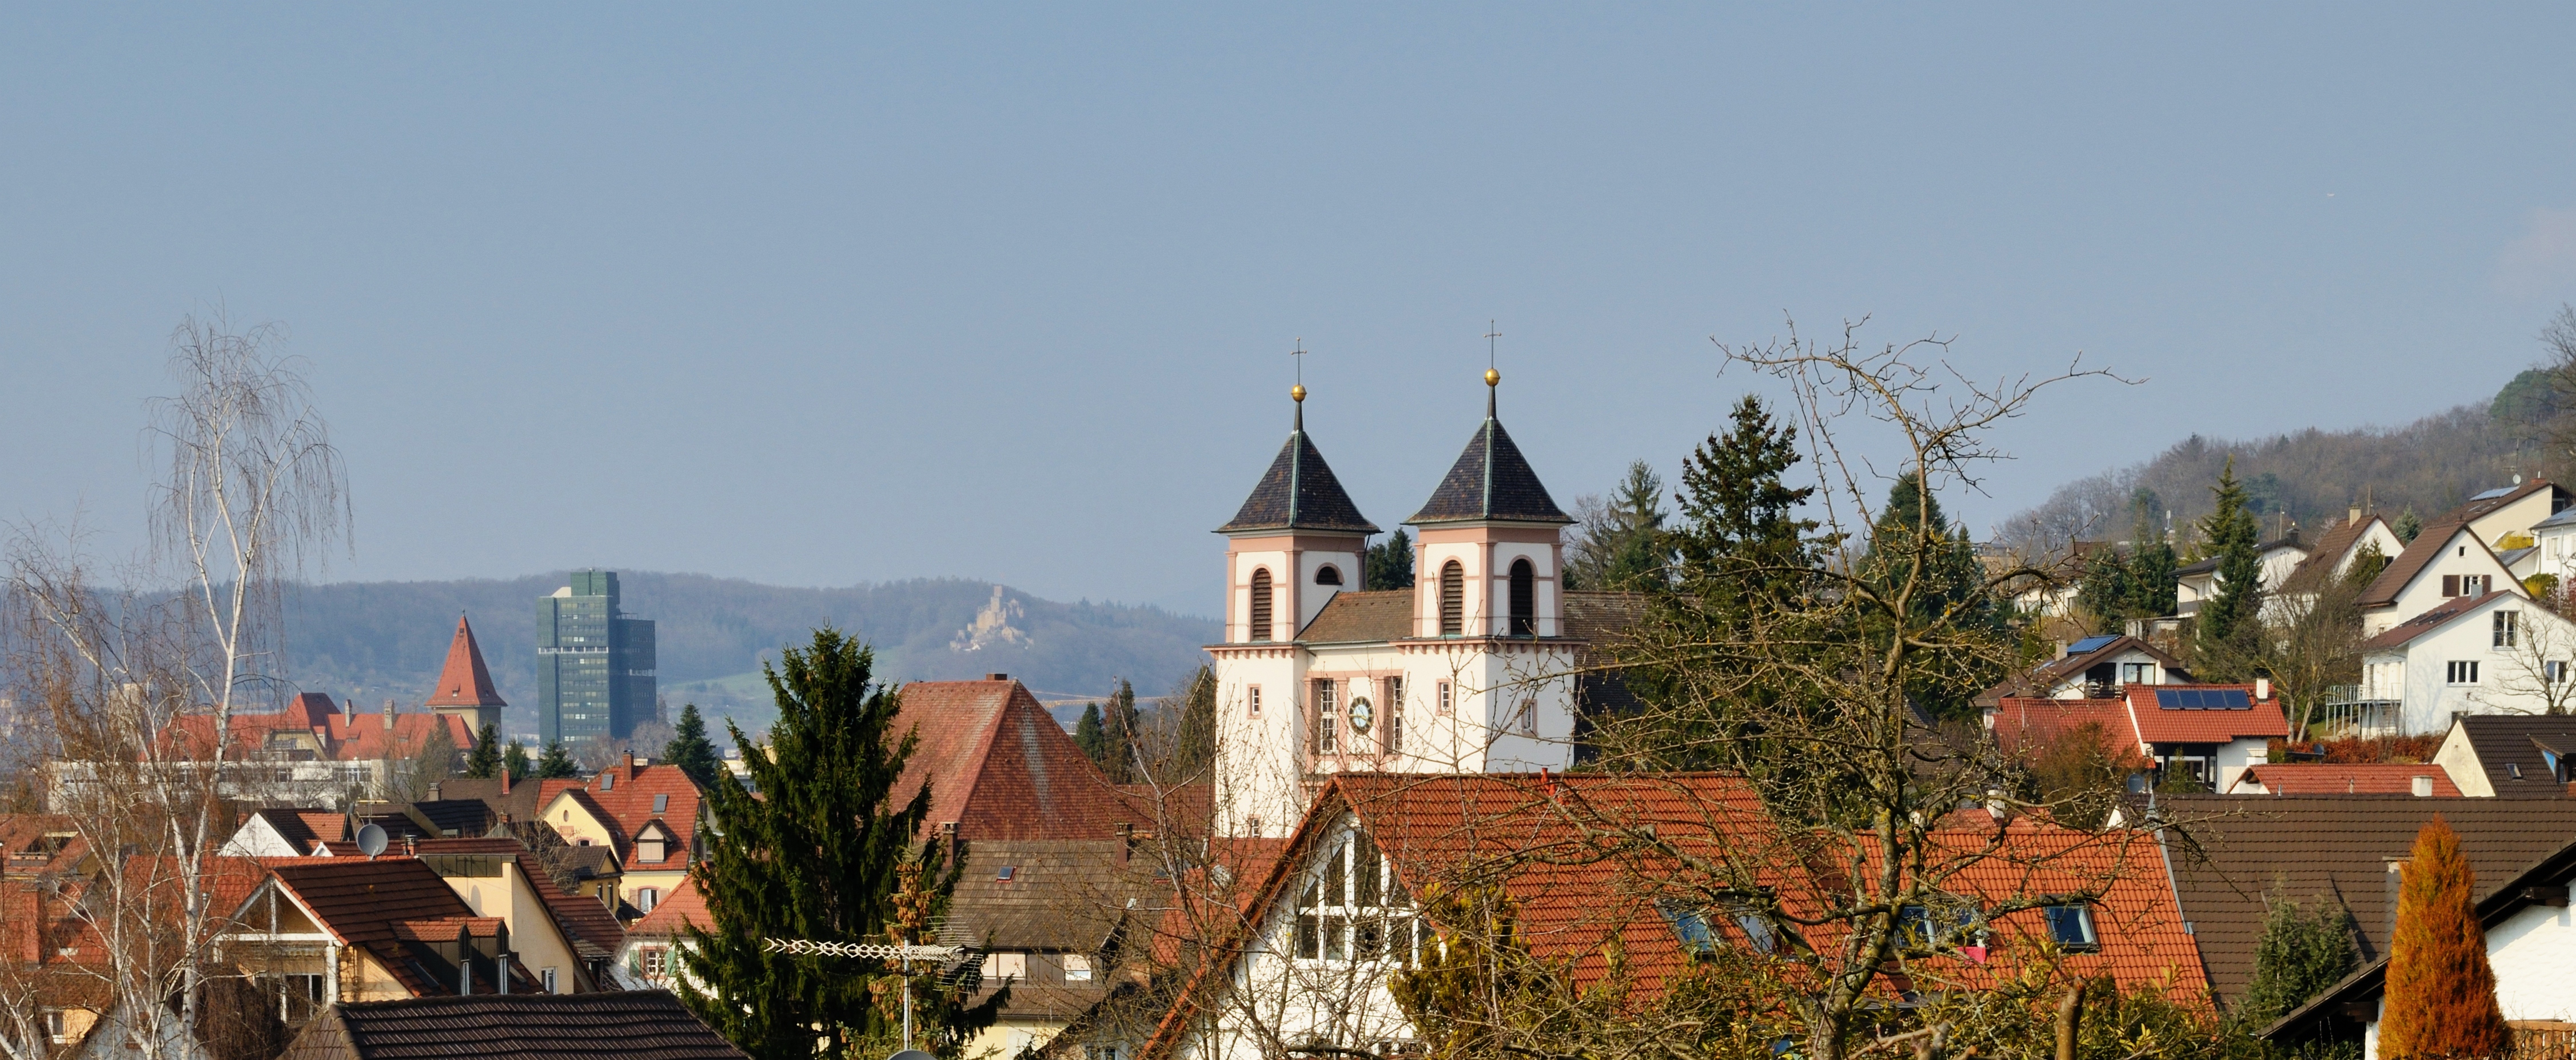 Lörrach-Stetten - Blick auf den Ort